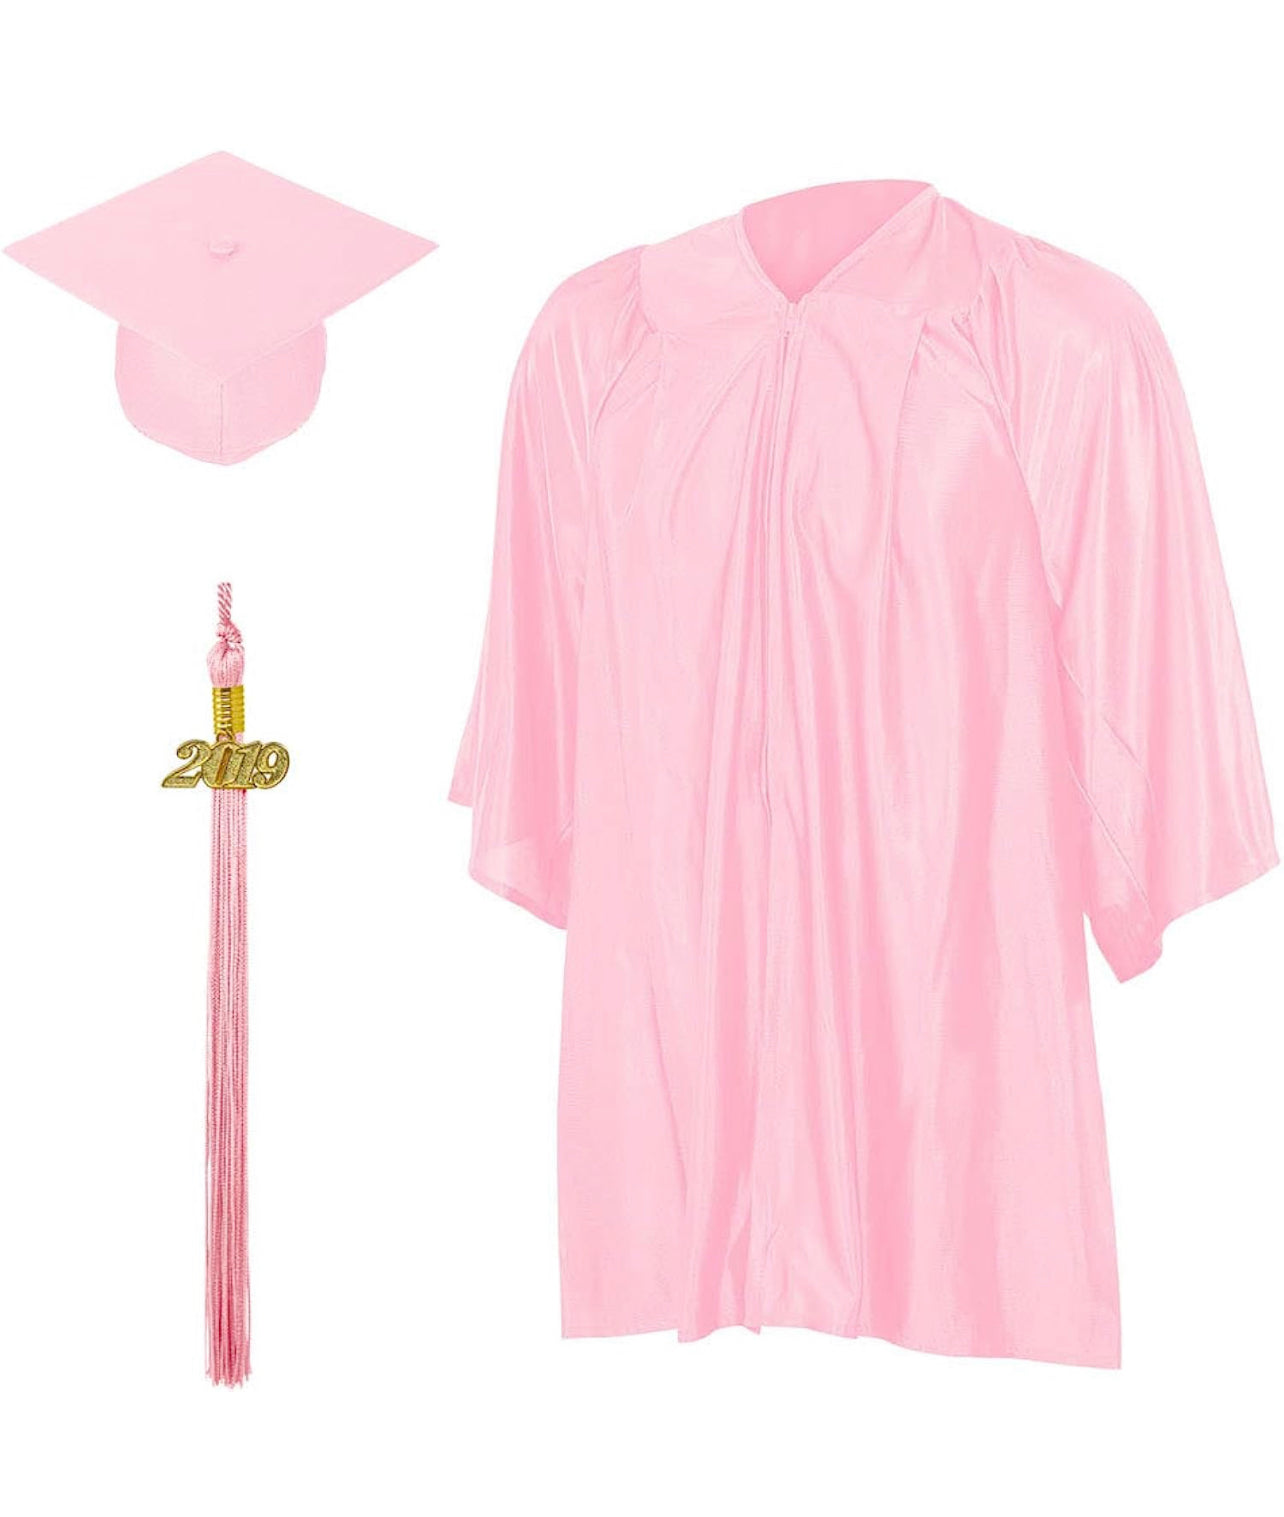 Stunning Pink Cap and Gown Graduation Photos